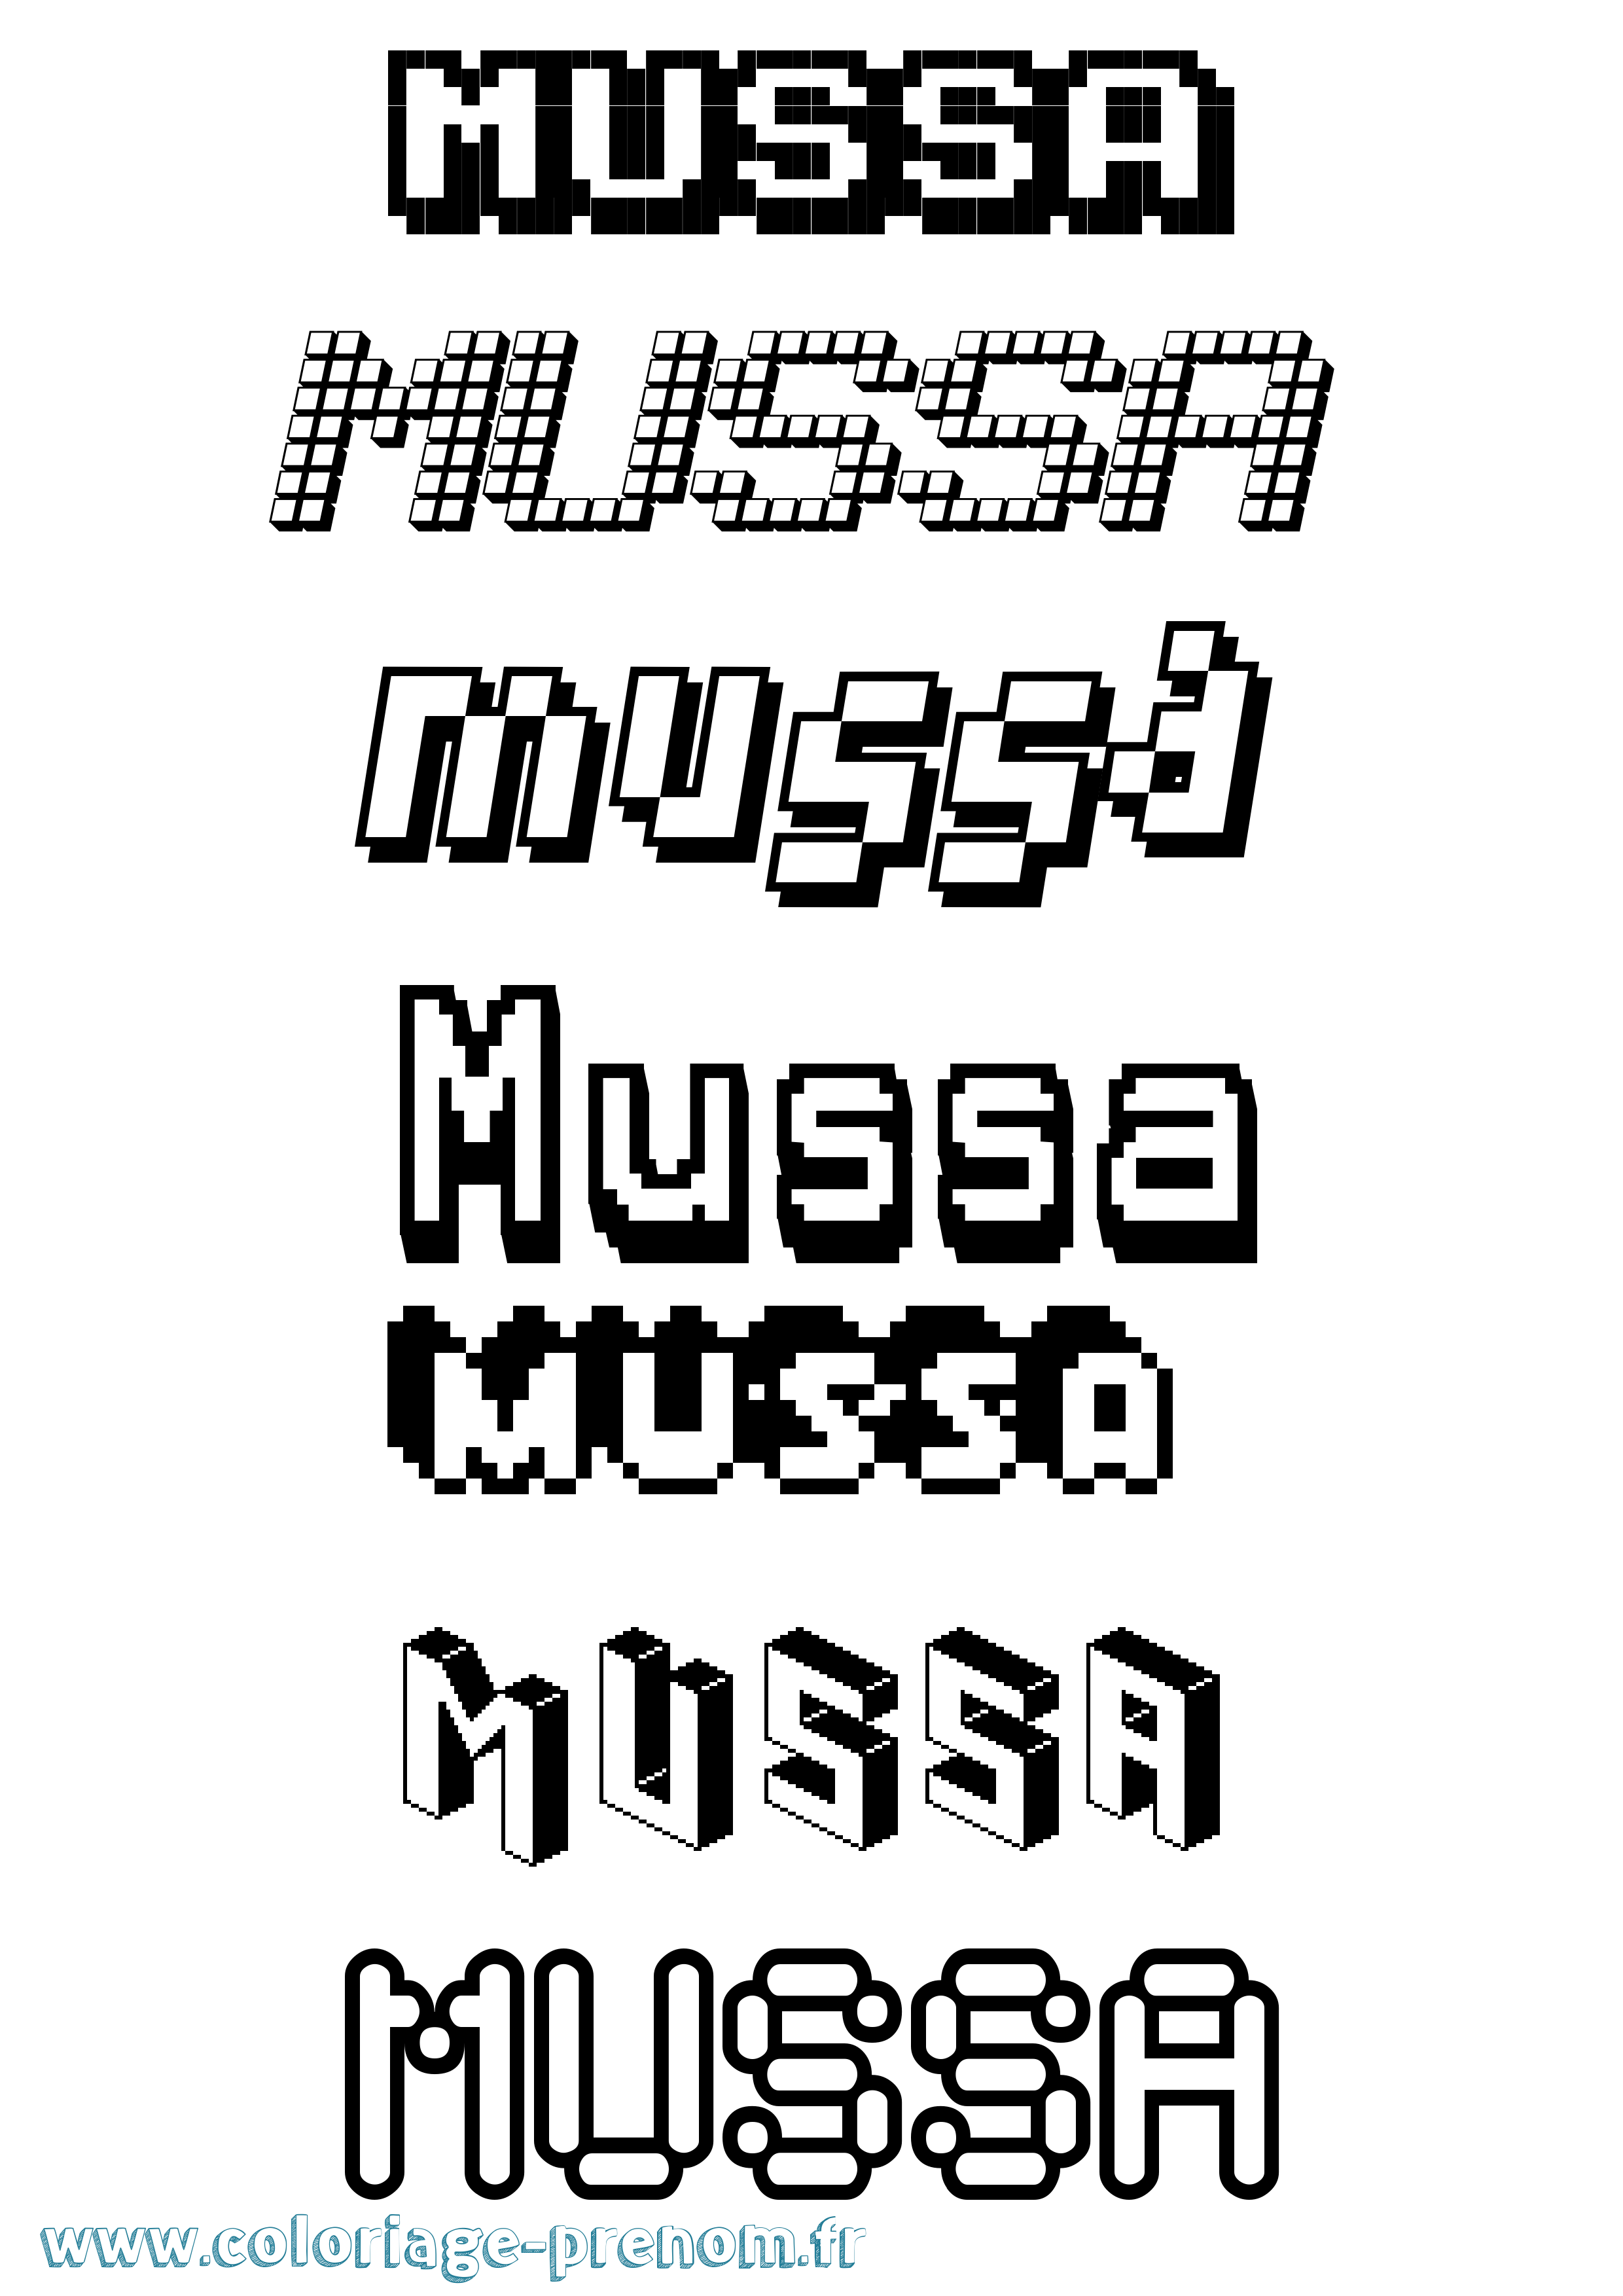 Coloriage prénom Mussa Pixel